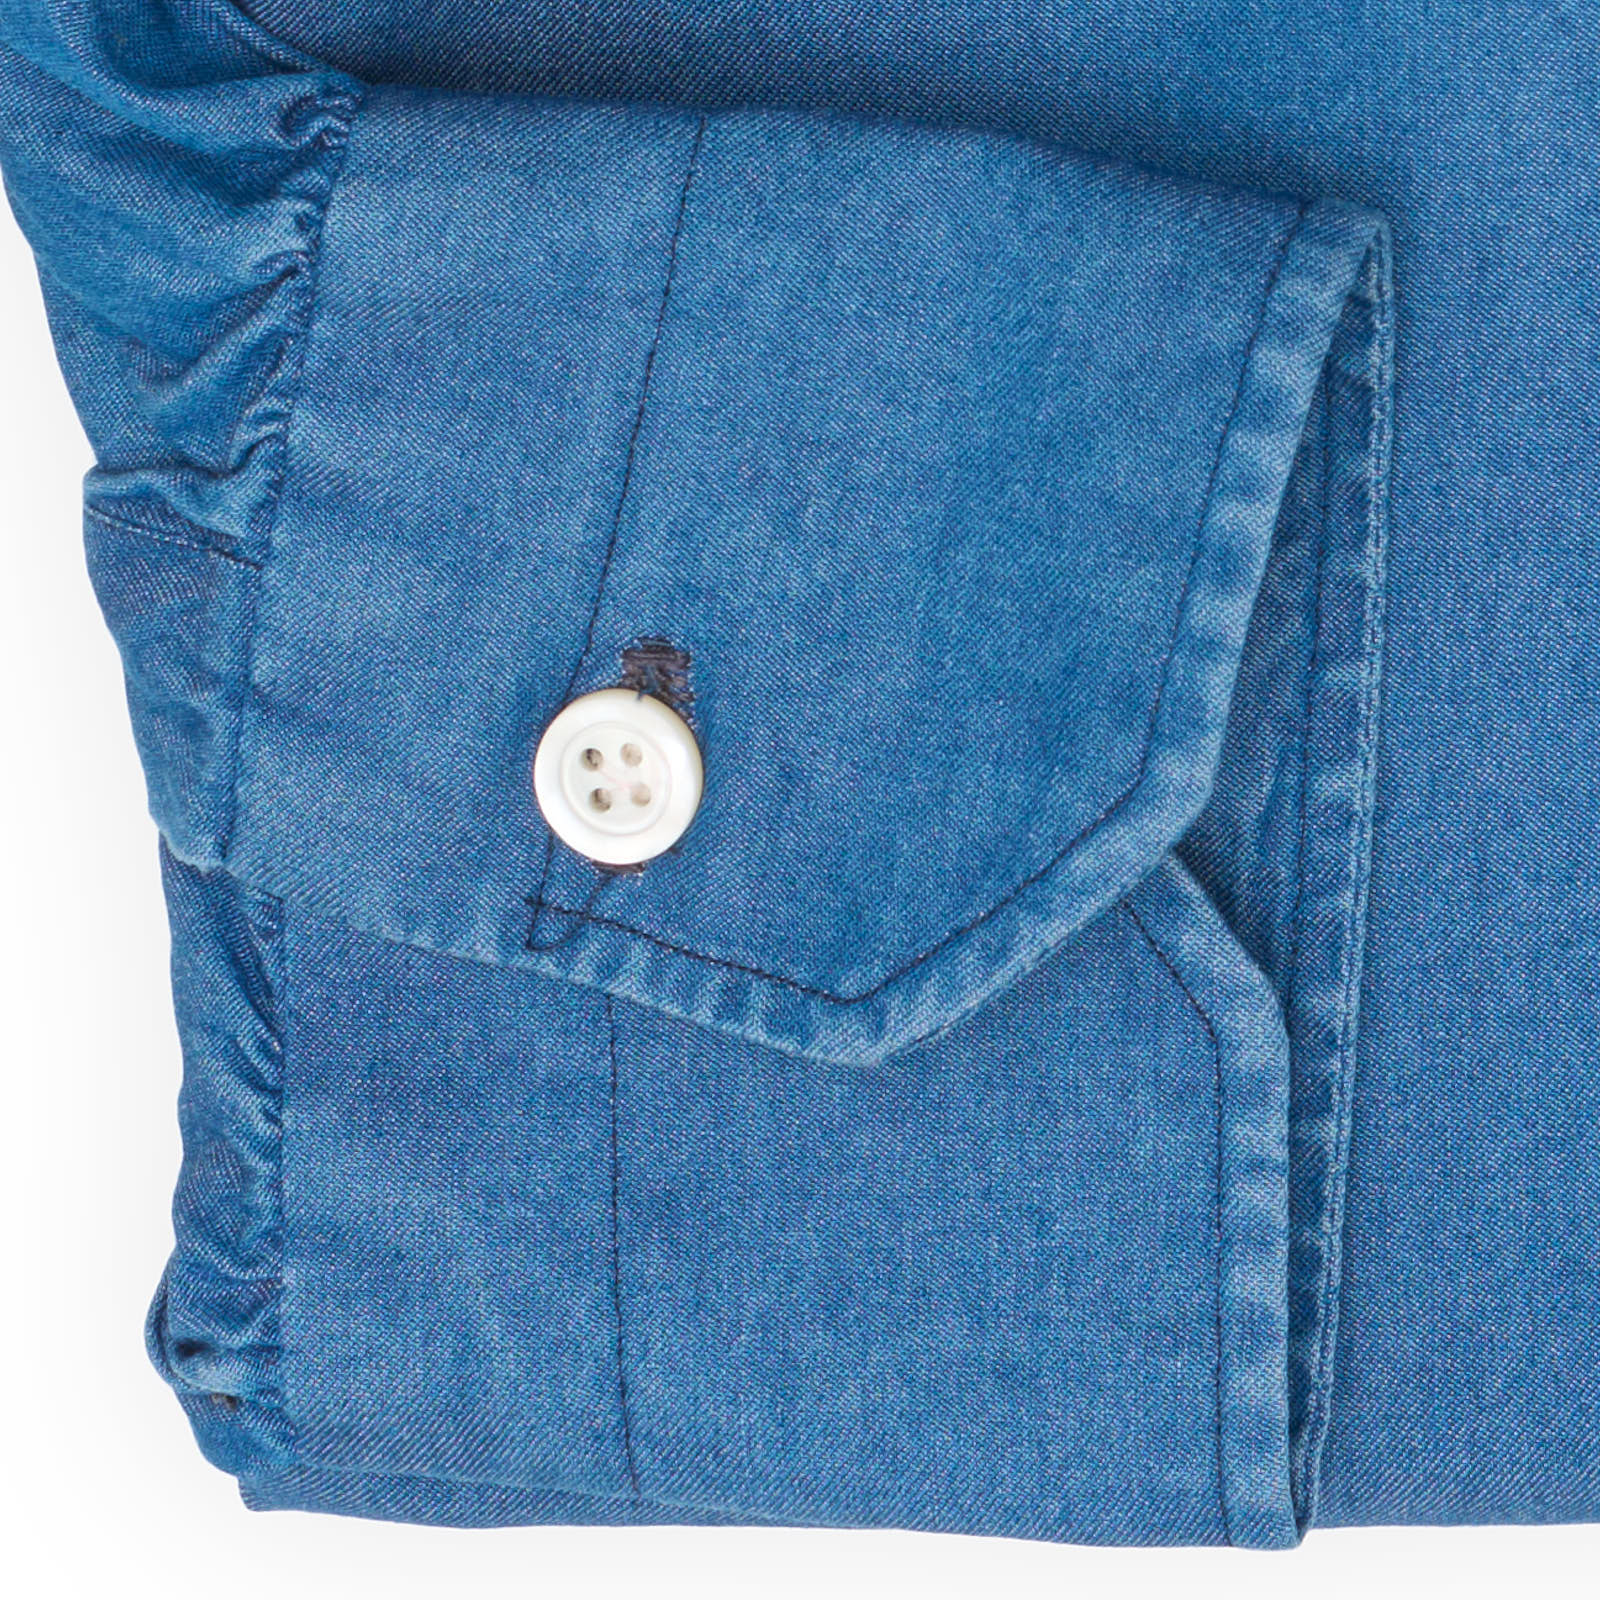 KITON Napoli Handmade Blue Denim Cotton Shirt EU 39 NEW US 15.5